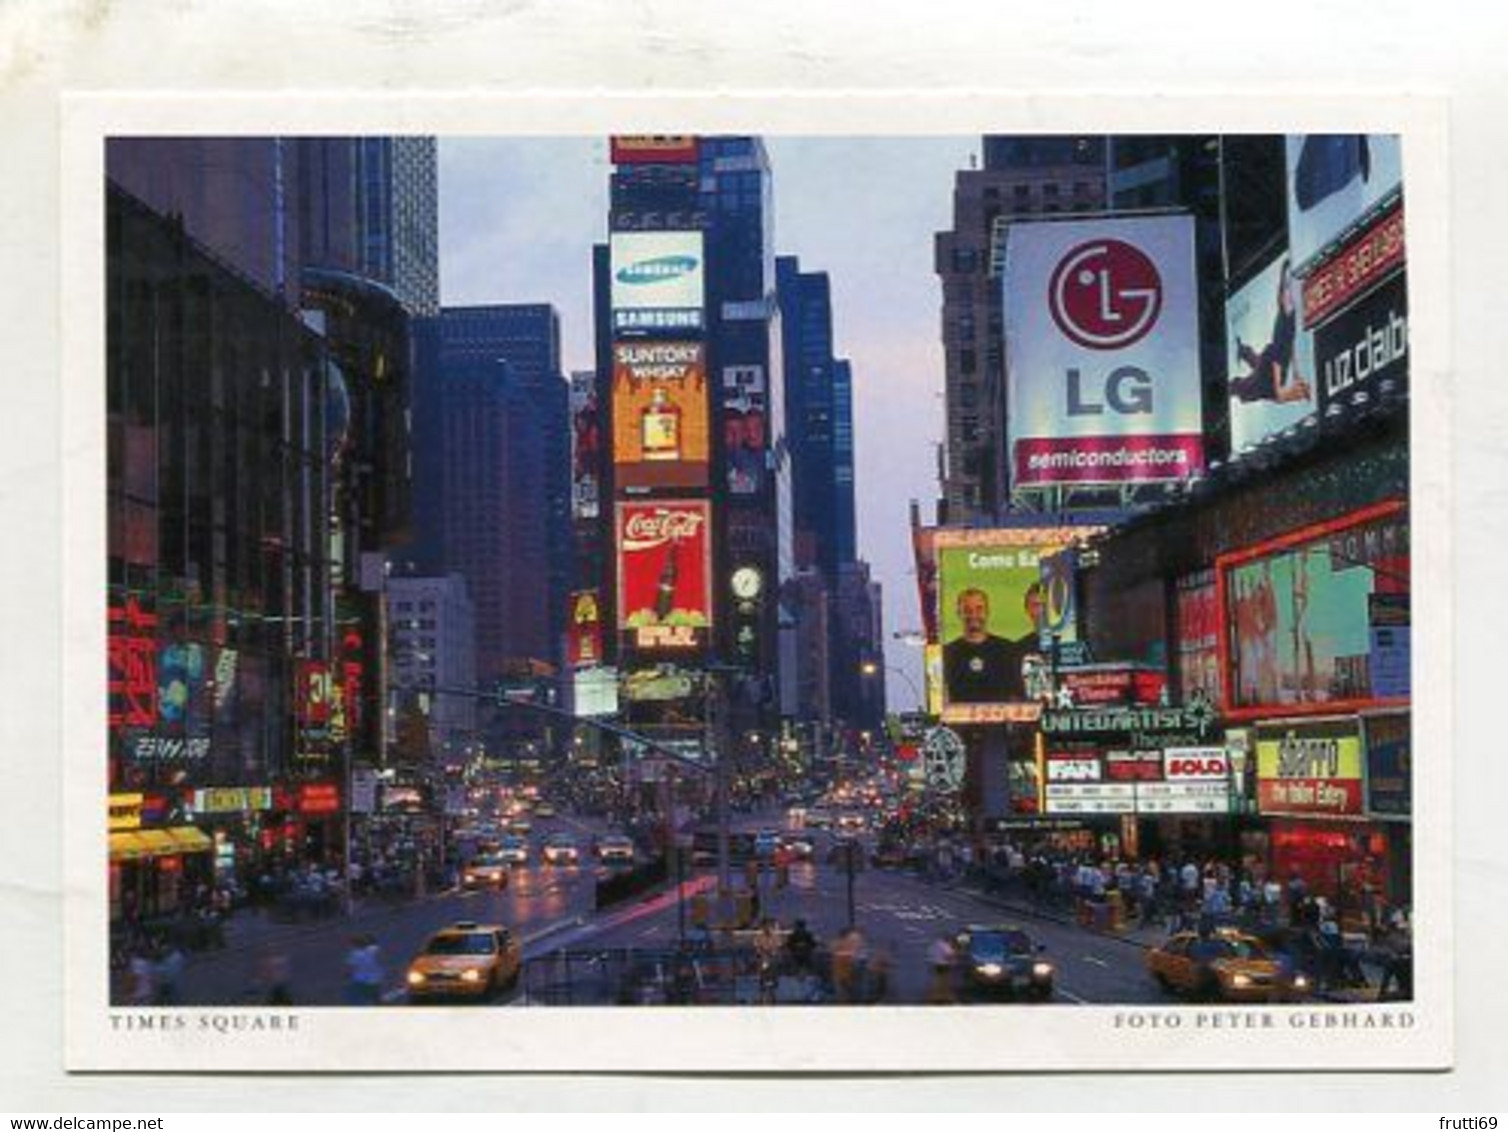 AK 080404 USA - New York City - Times Square - Time Square